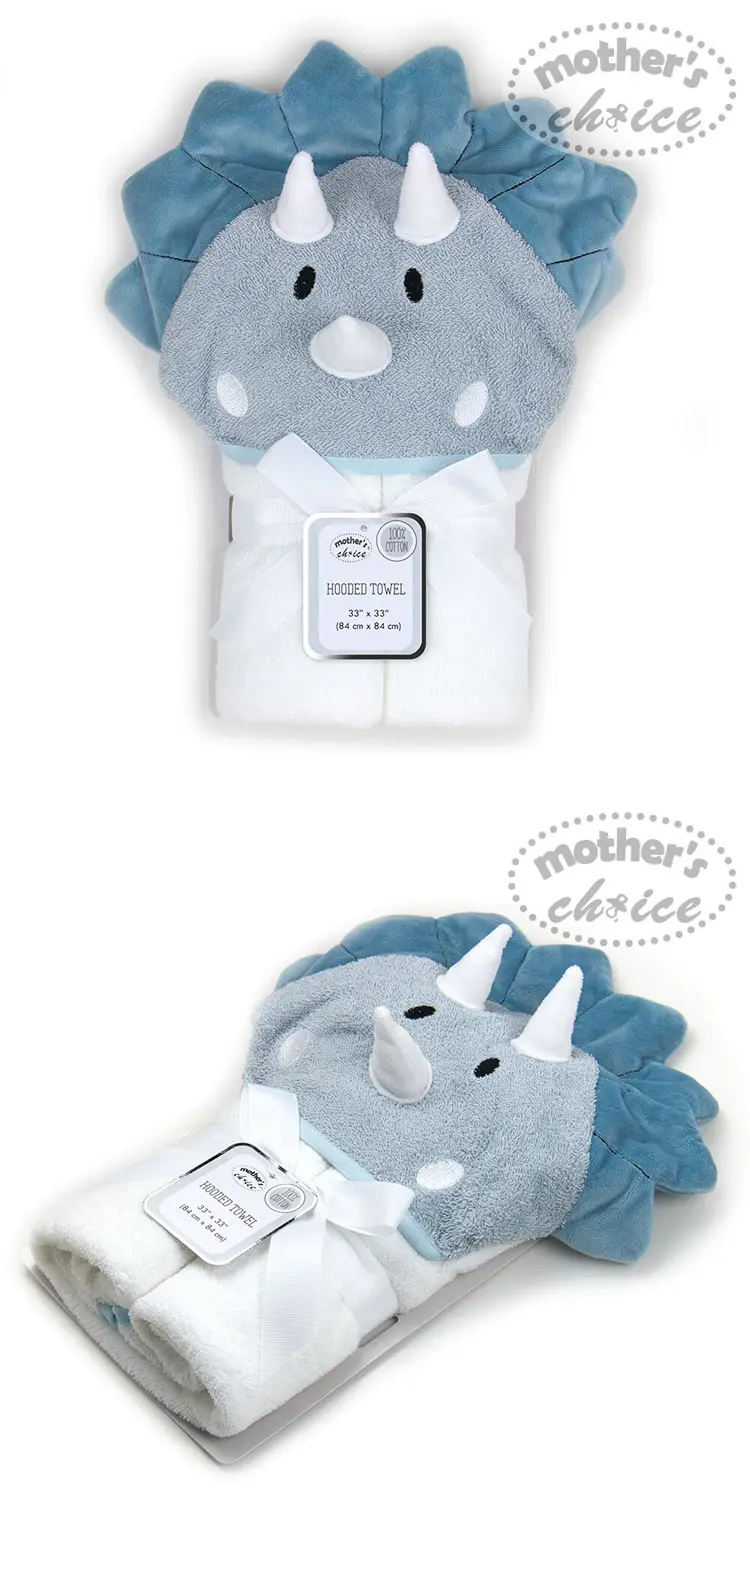 Mother's Choice 婴儿浴巾连帽-恐龙